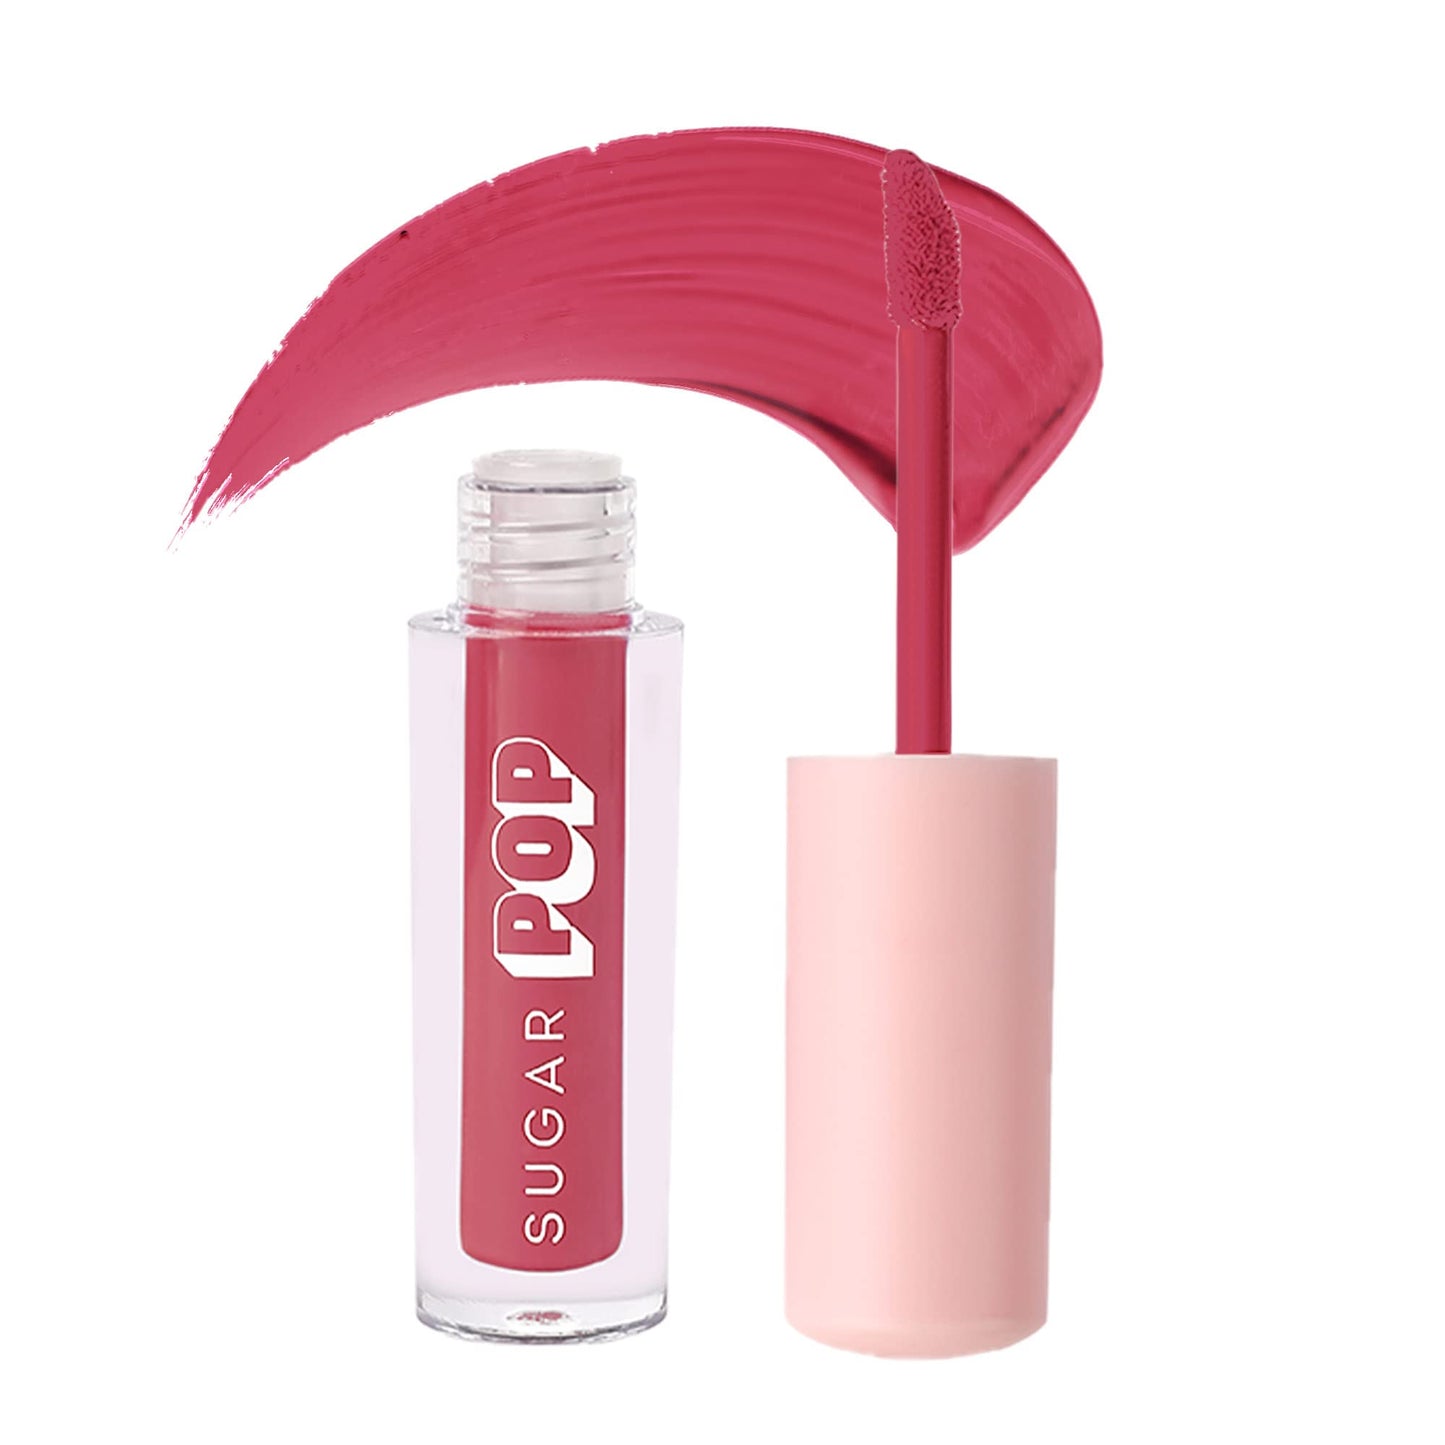 SUGAR POP Matte Lipcolour - 15 Flamingo (Pinkish Purple) – 1.6 ml | Non-Drying, Smudge Proof & SUGAR POP Matte Lipcolour - 20 Poppy (Hot Pink) – 1.6 ml - Lasts Up to 8 hours l Pink Lipstick